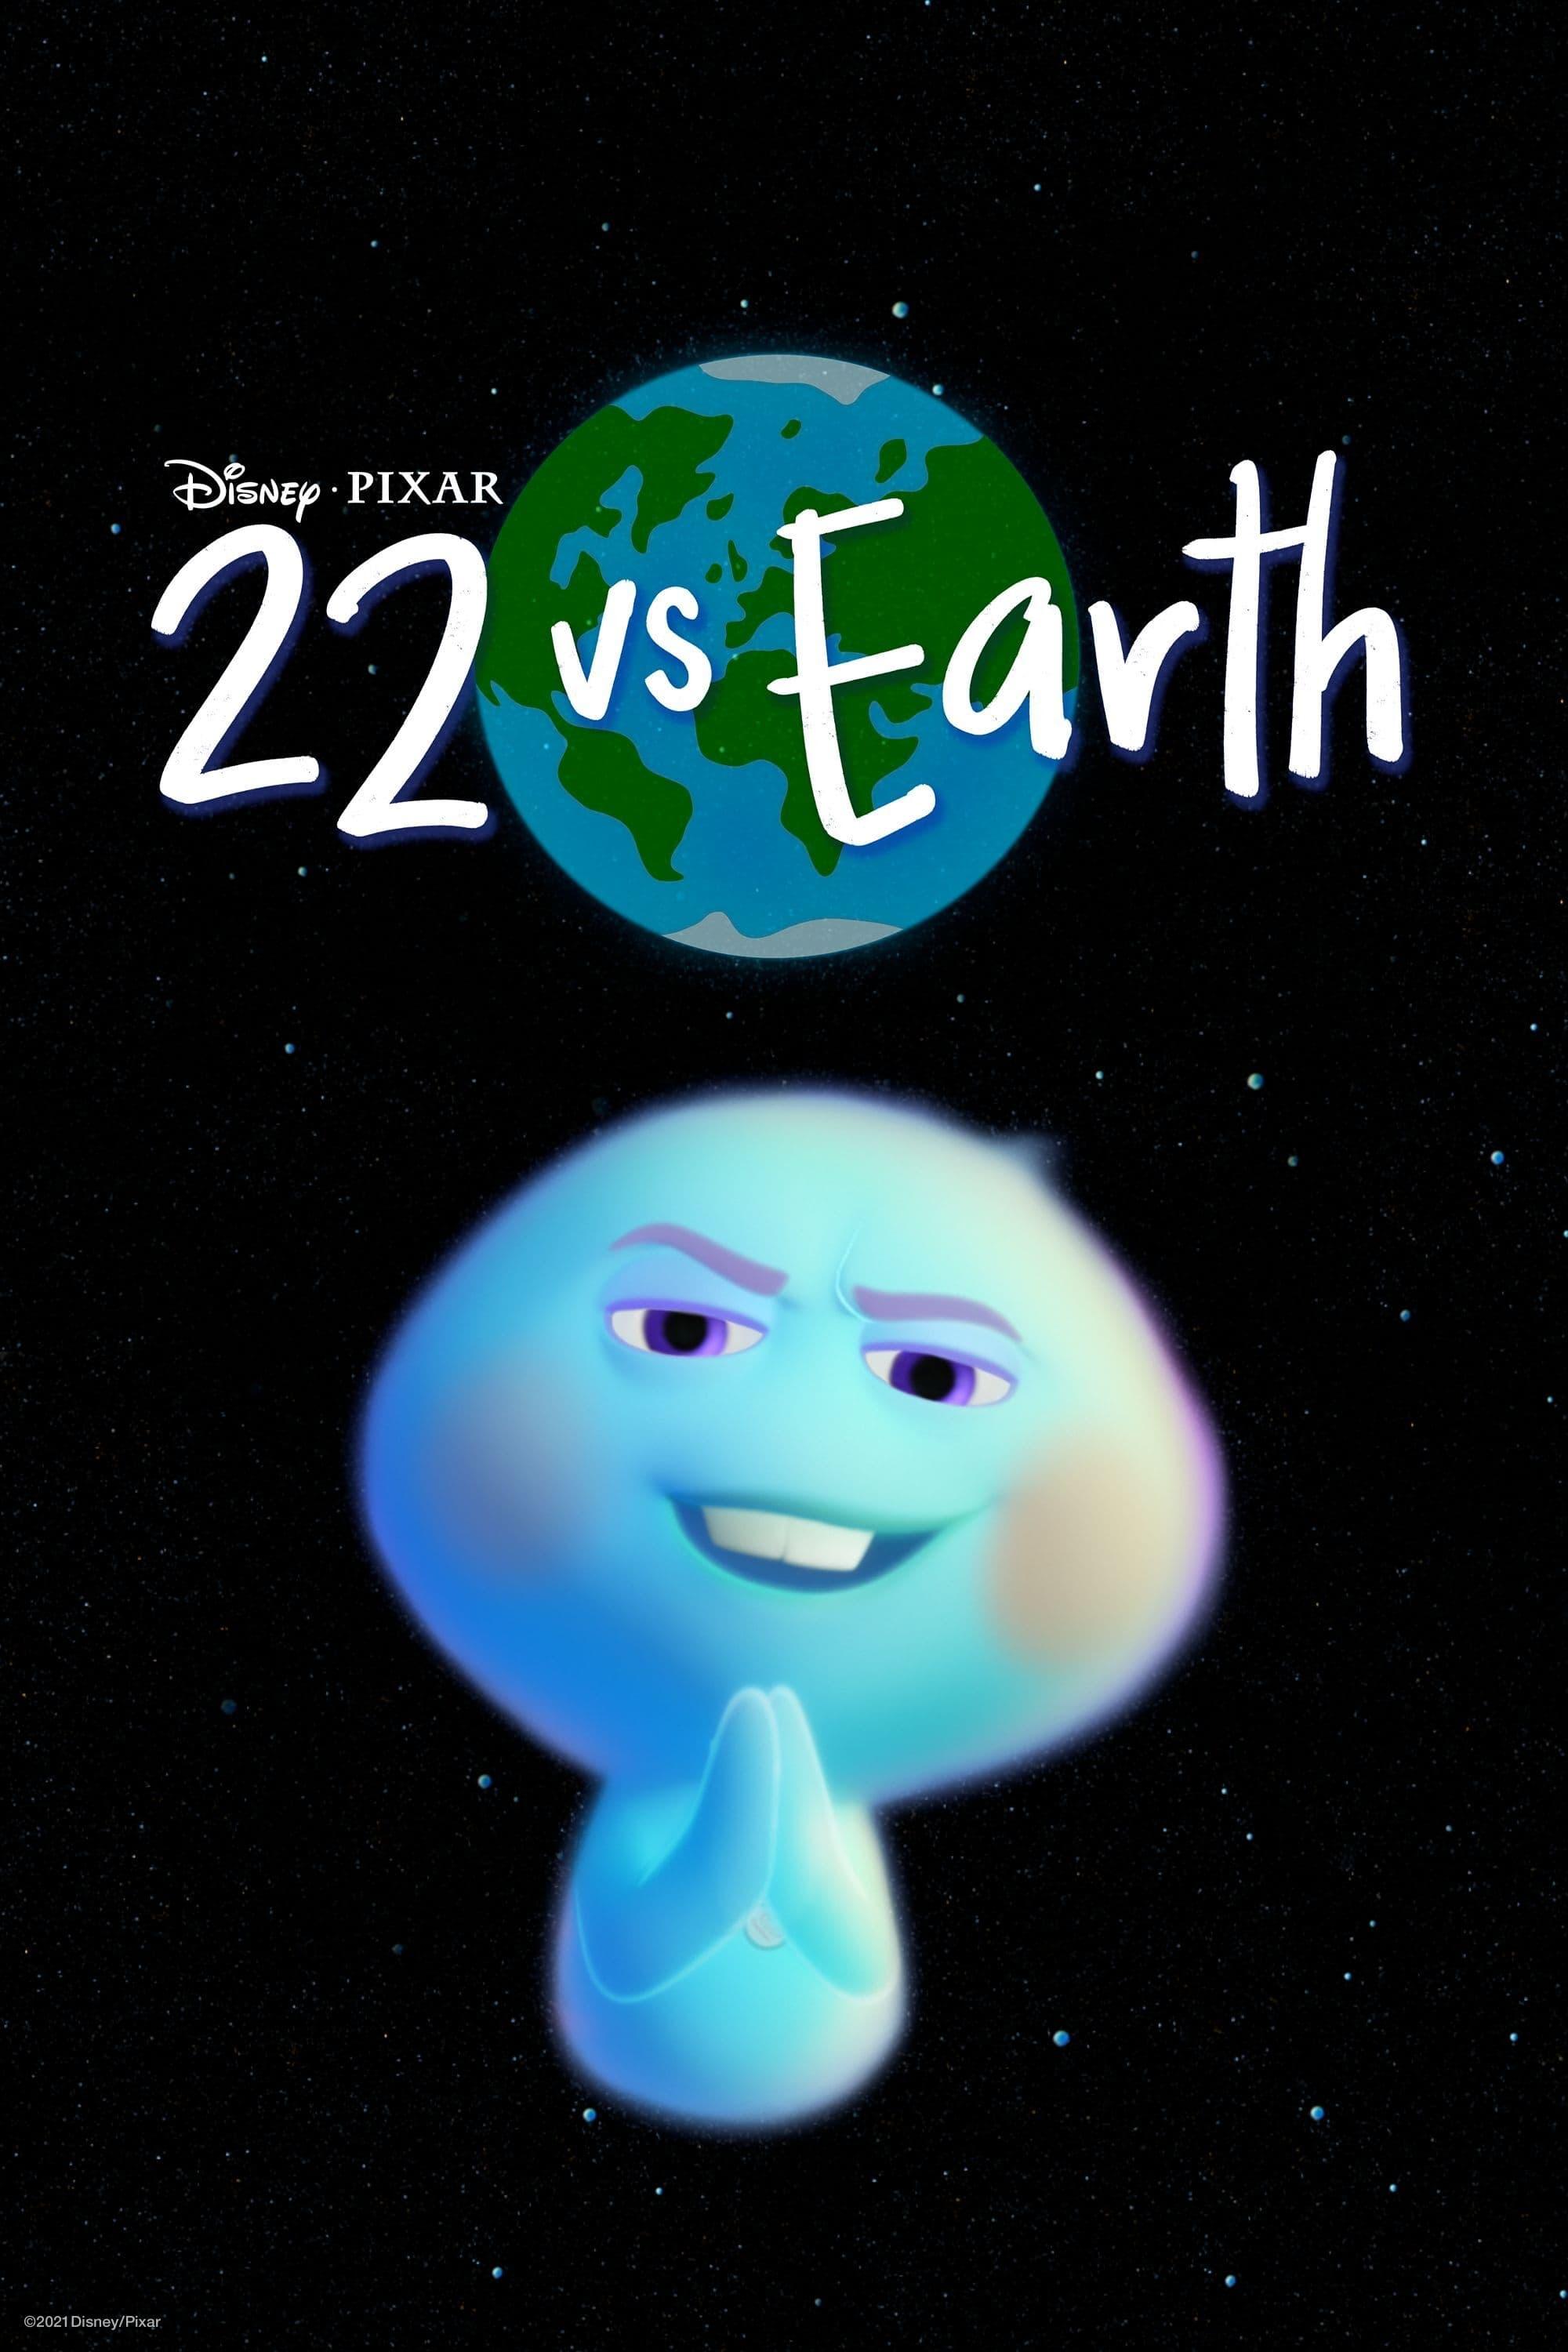 22 vs. Earth poster